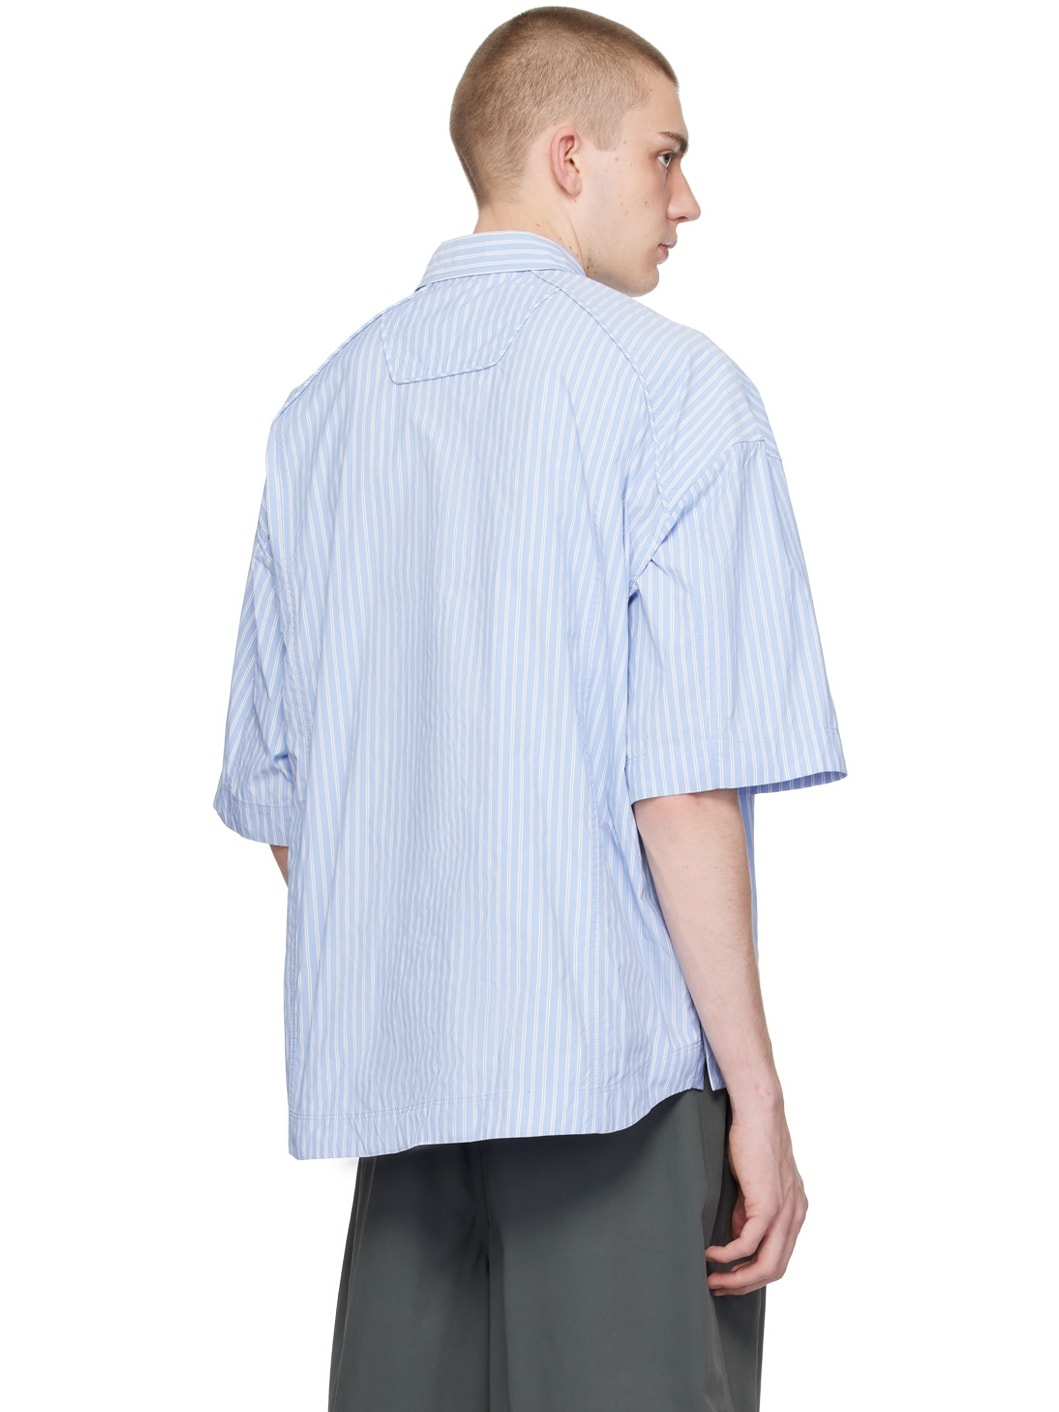 Blue & White Stripe Shirt - 3